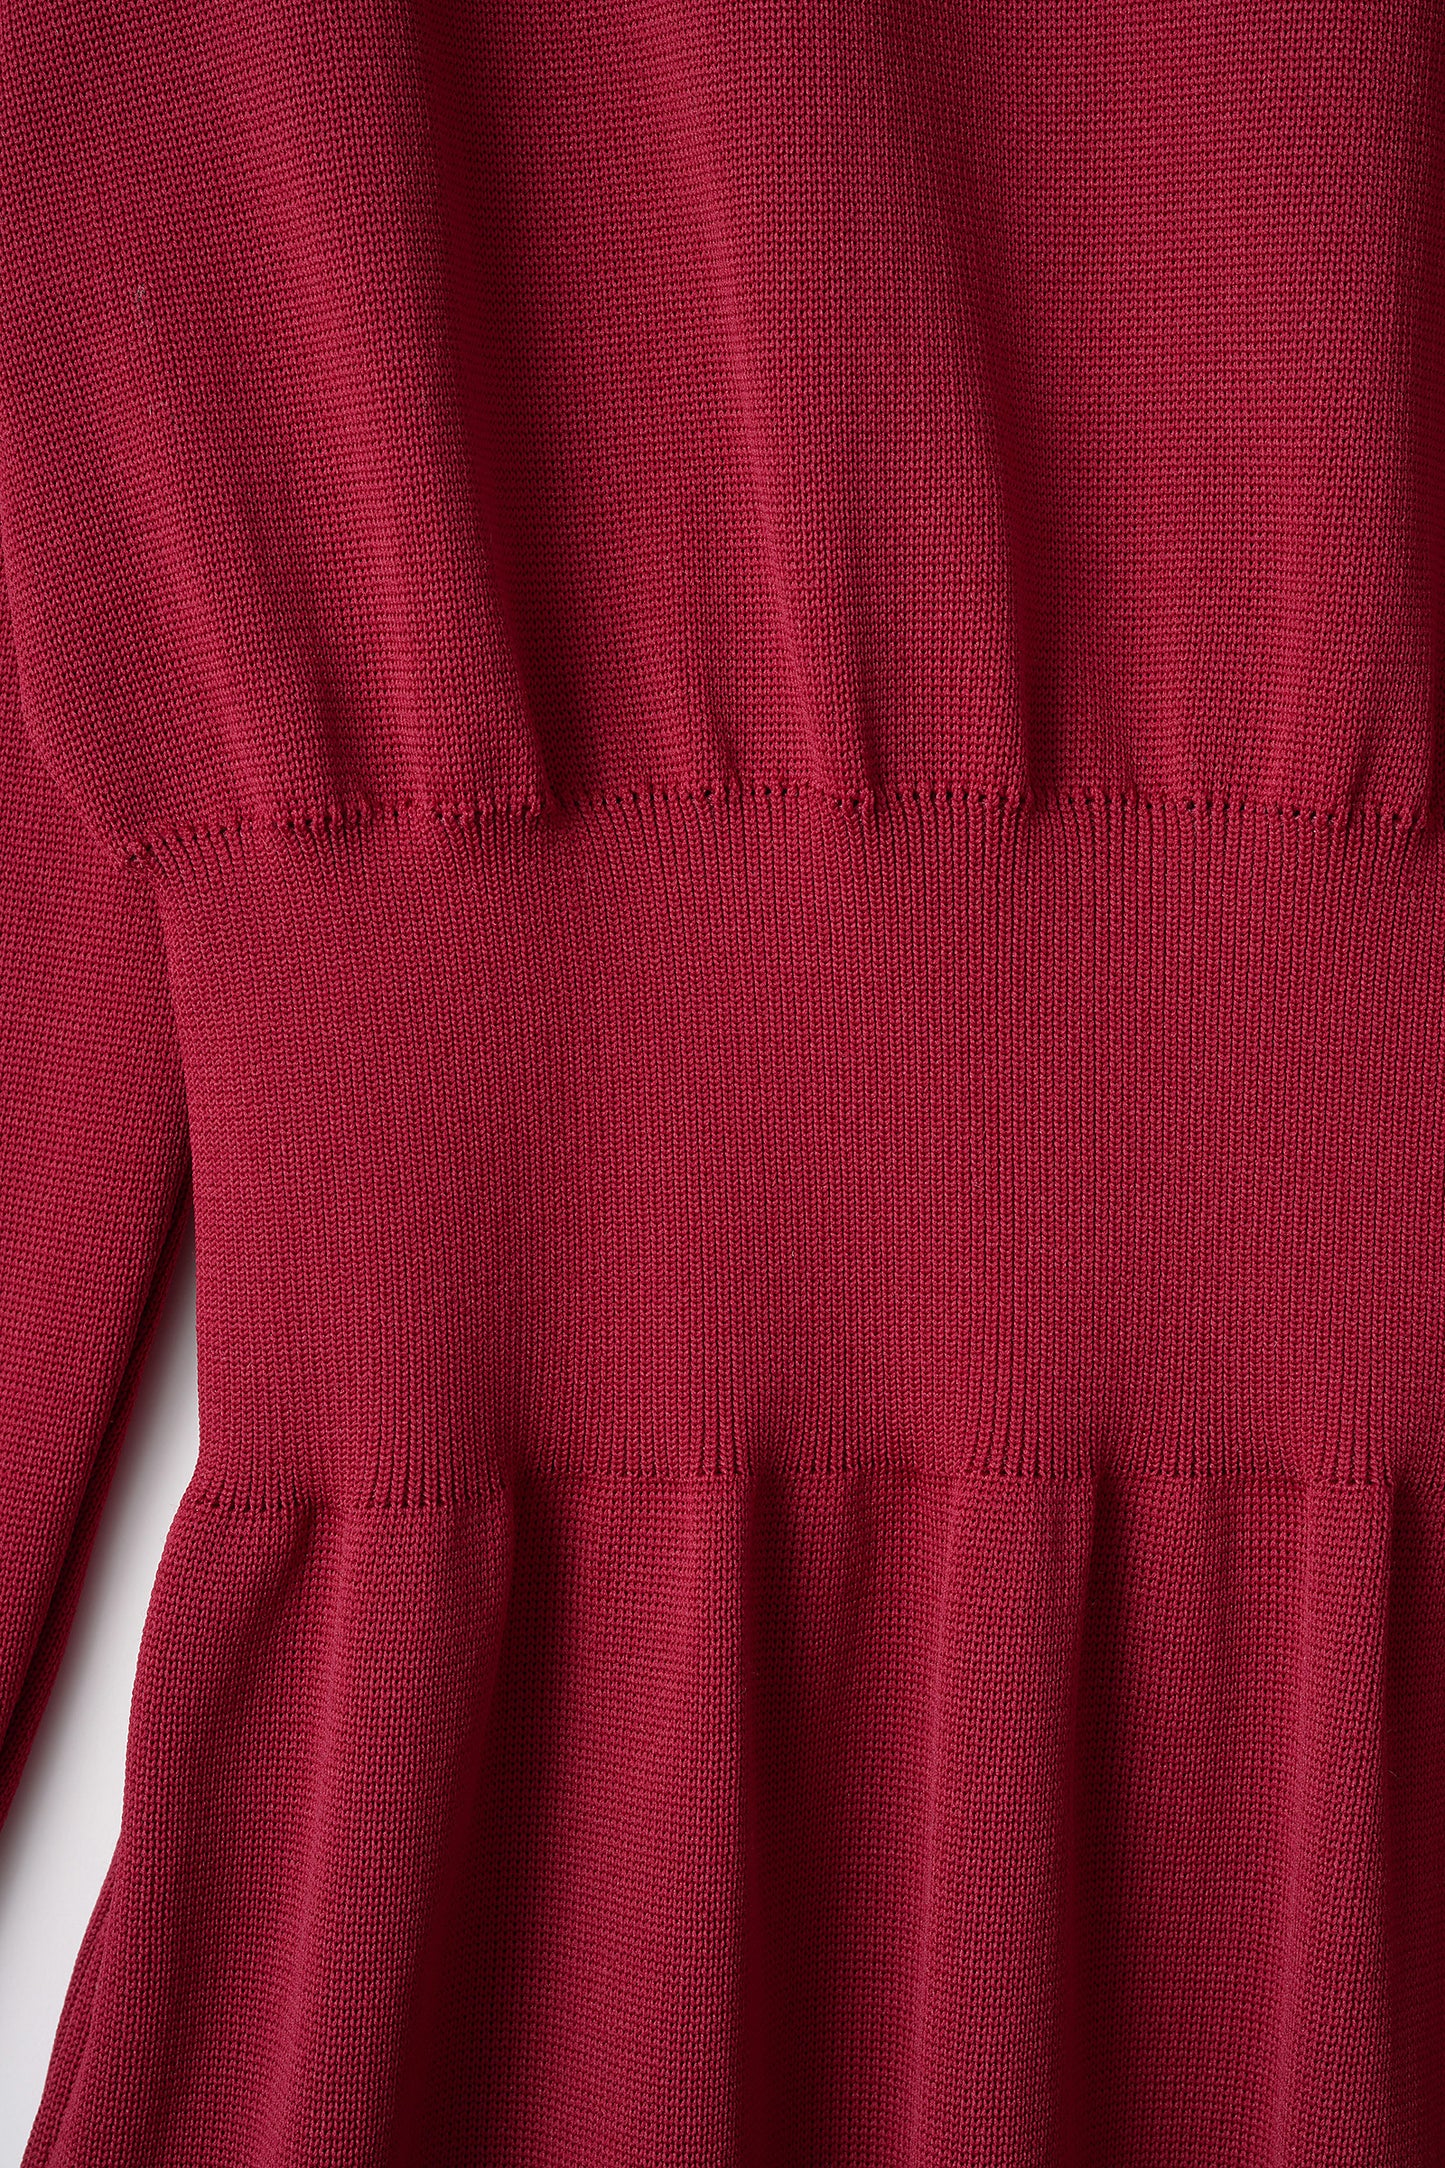 Elastic knit dress (Bordeaux)